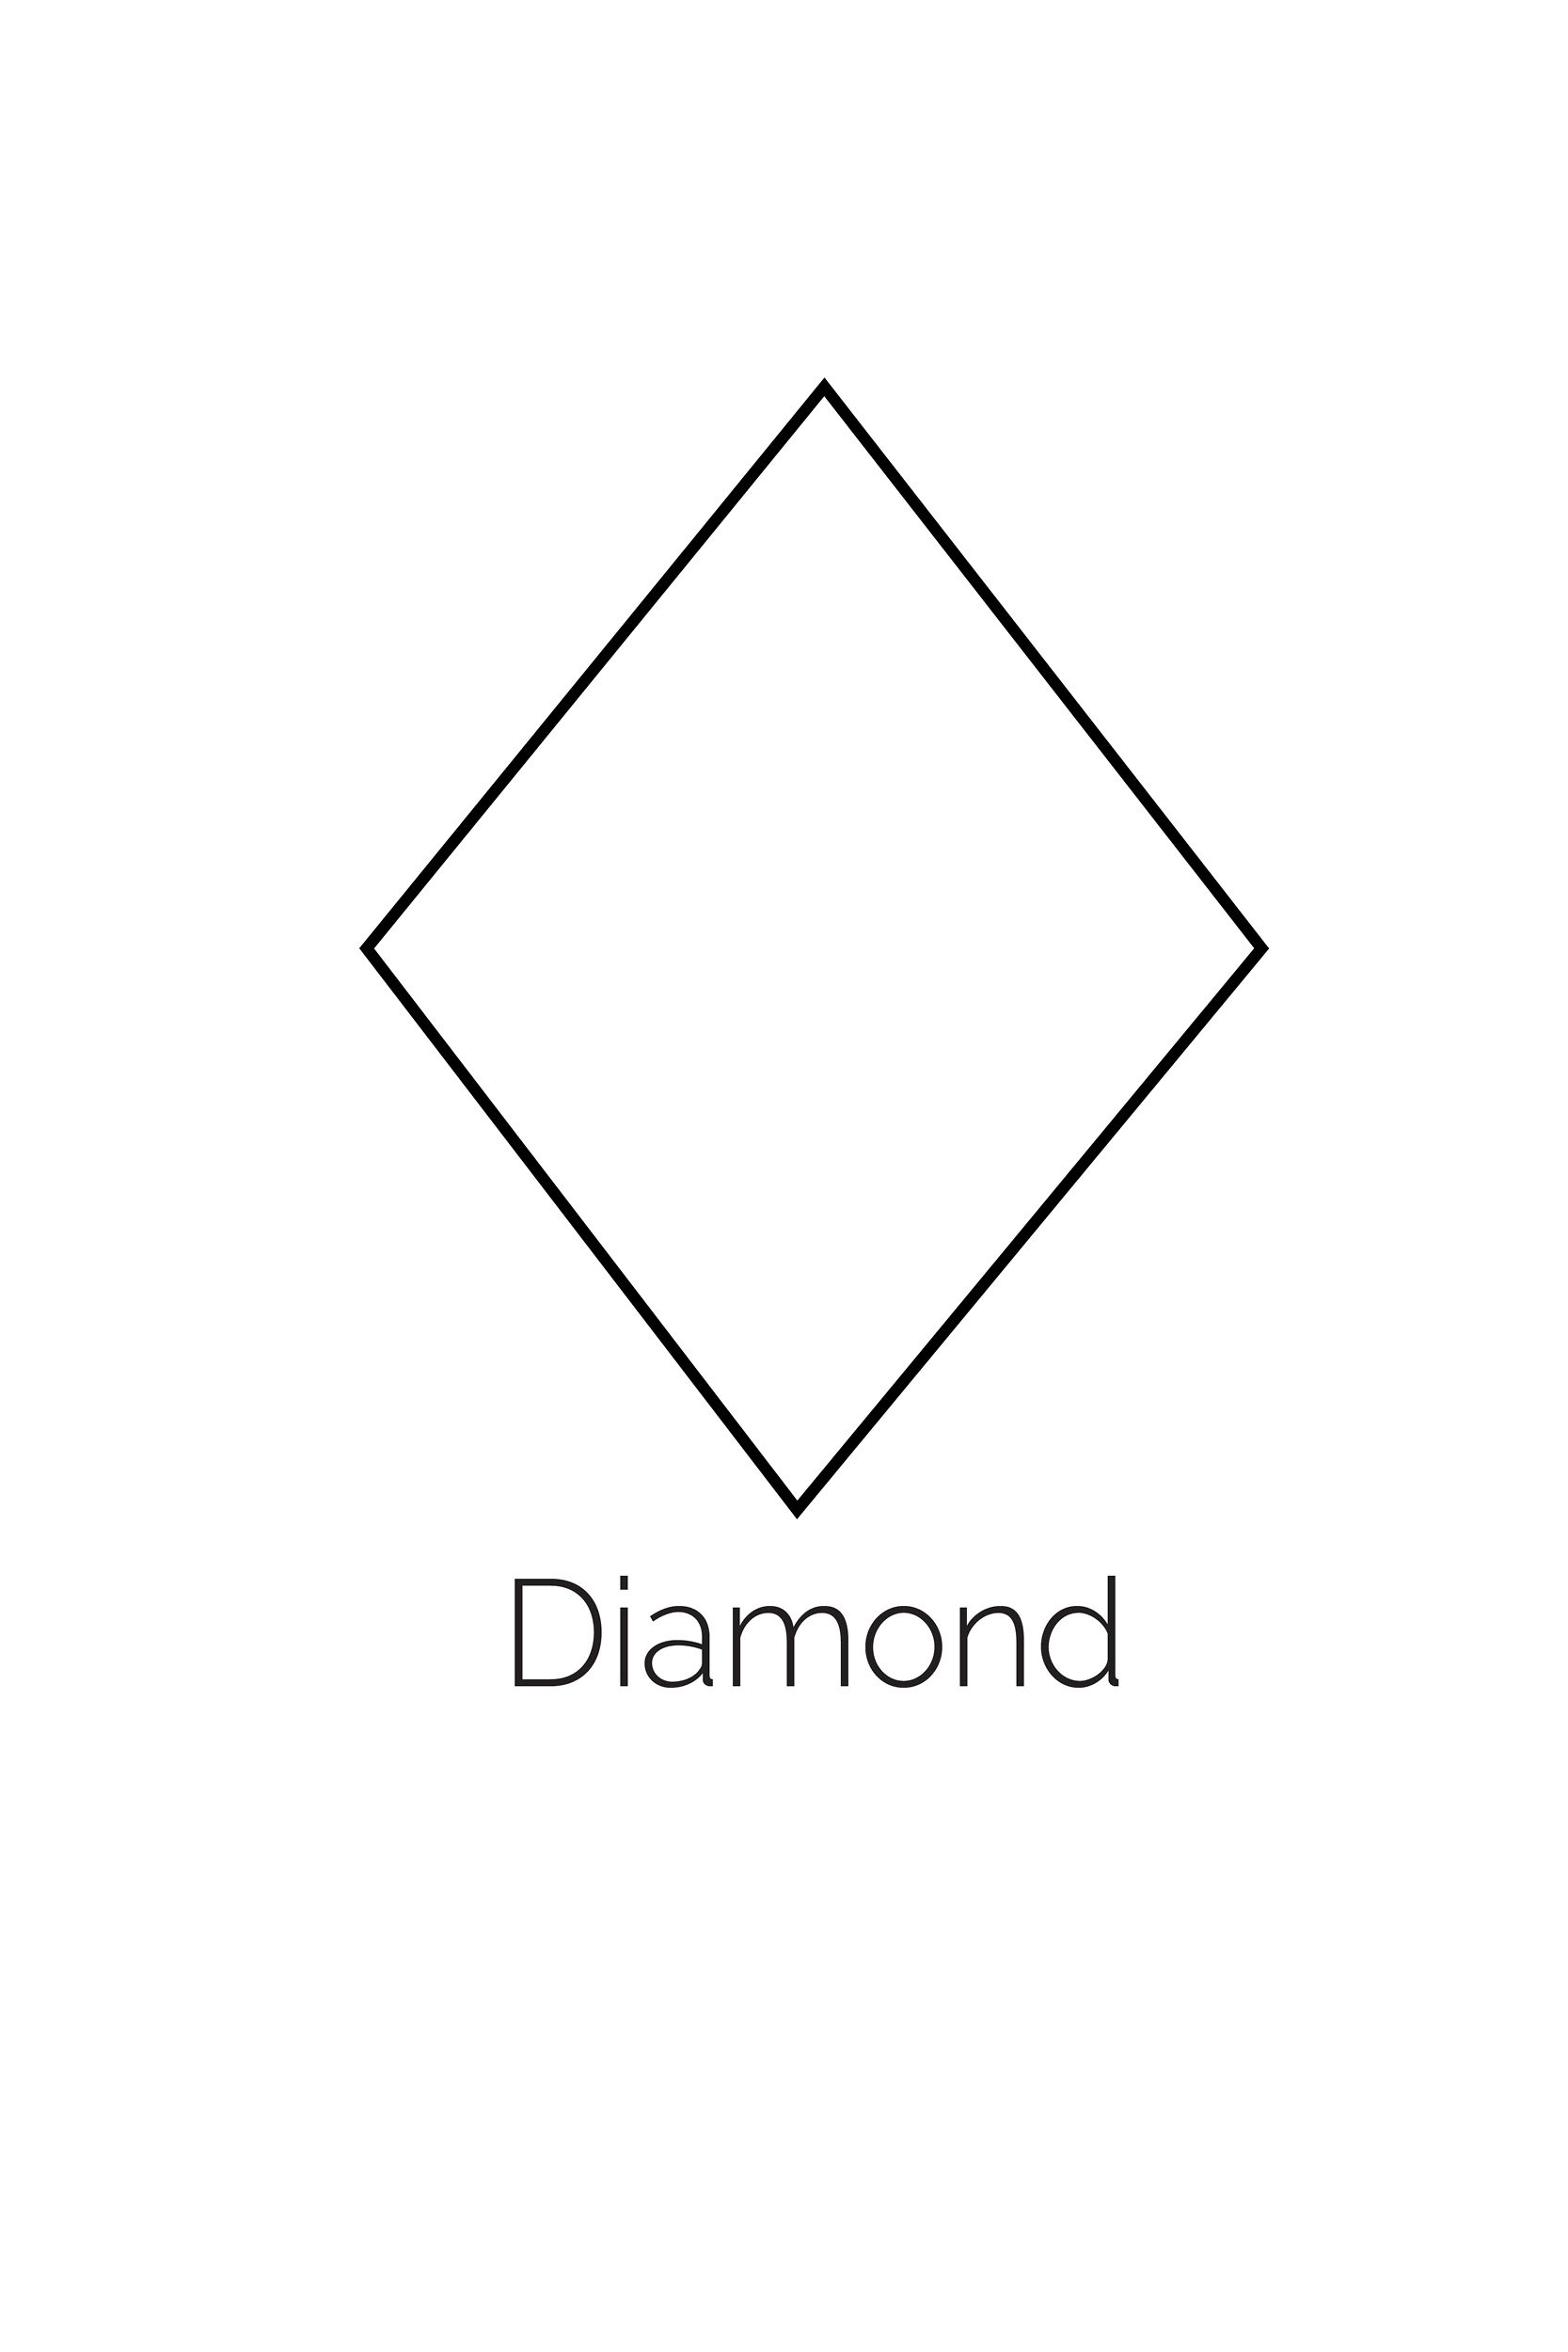 Free printable diamond shape